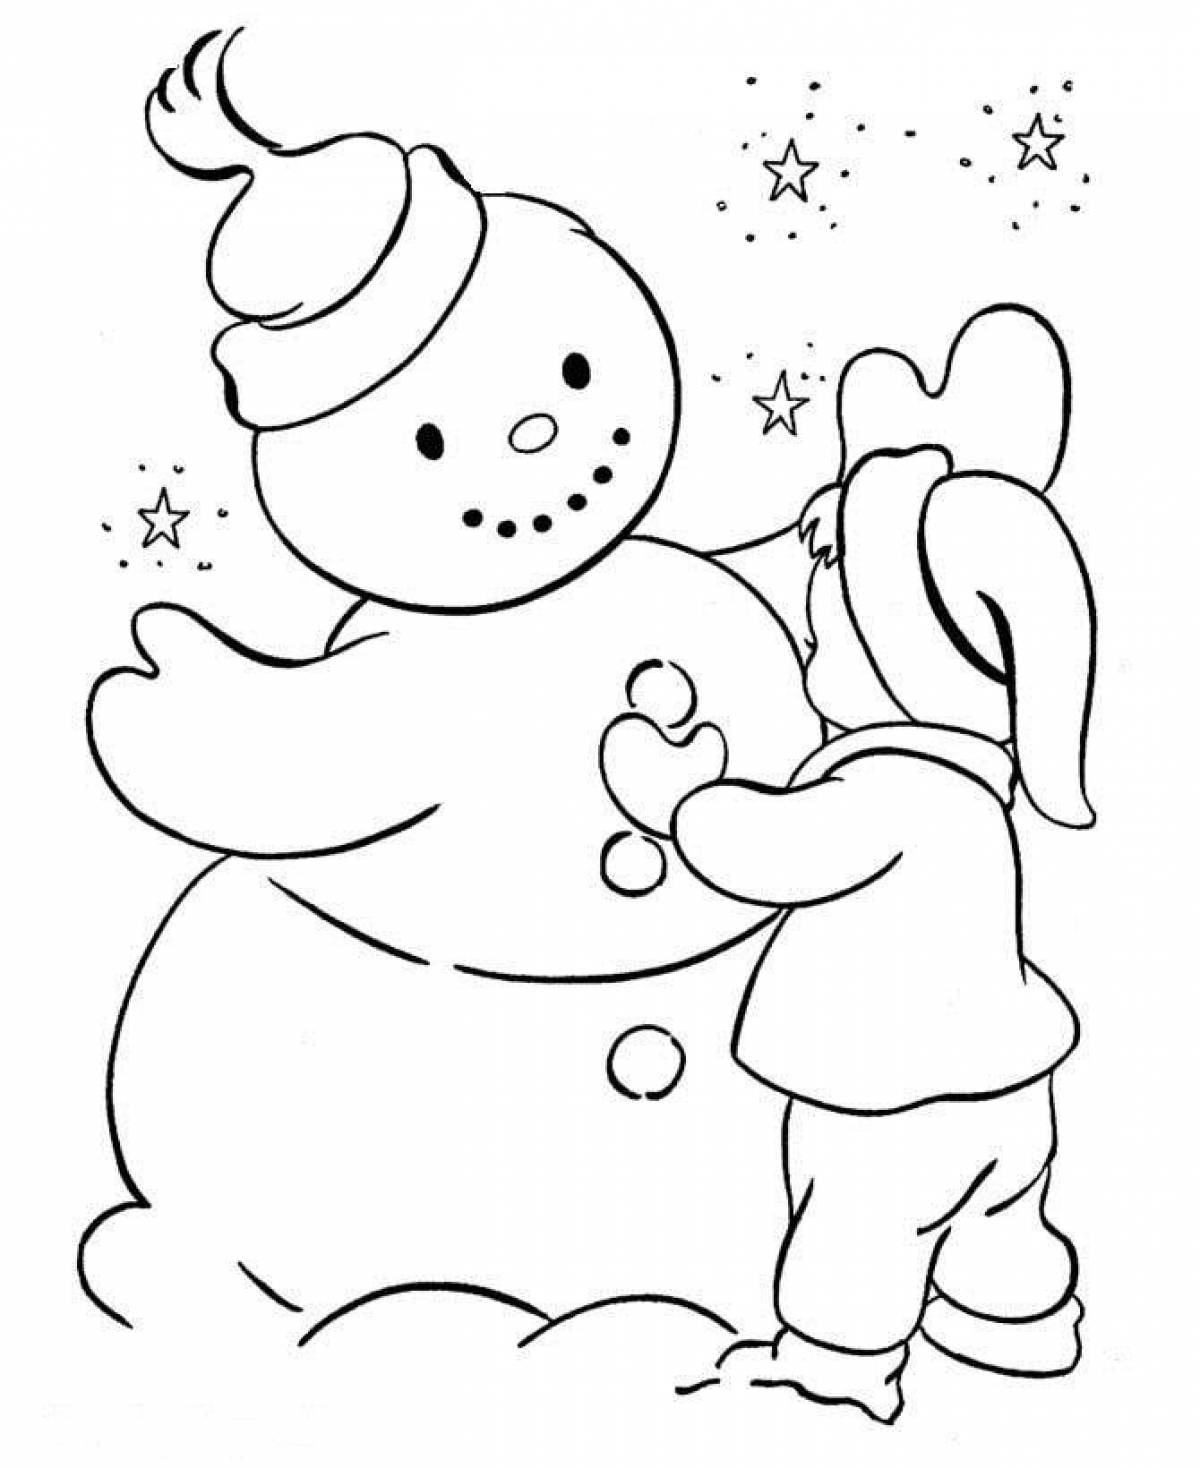 Color-tastic coloring page дети делают снеговика